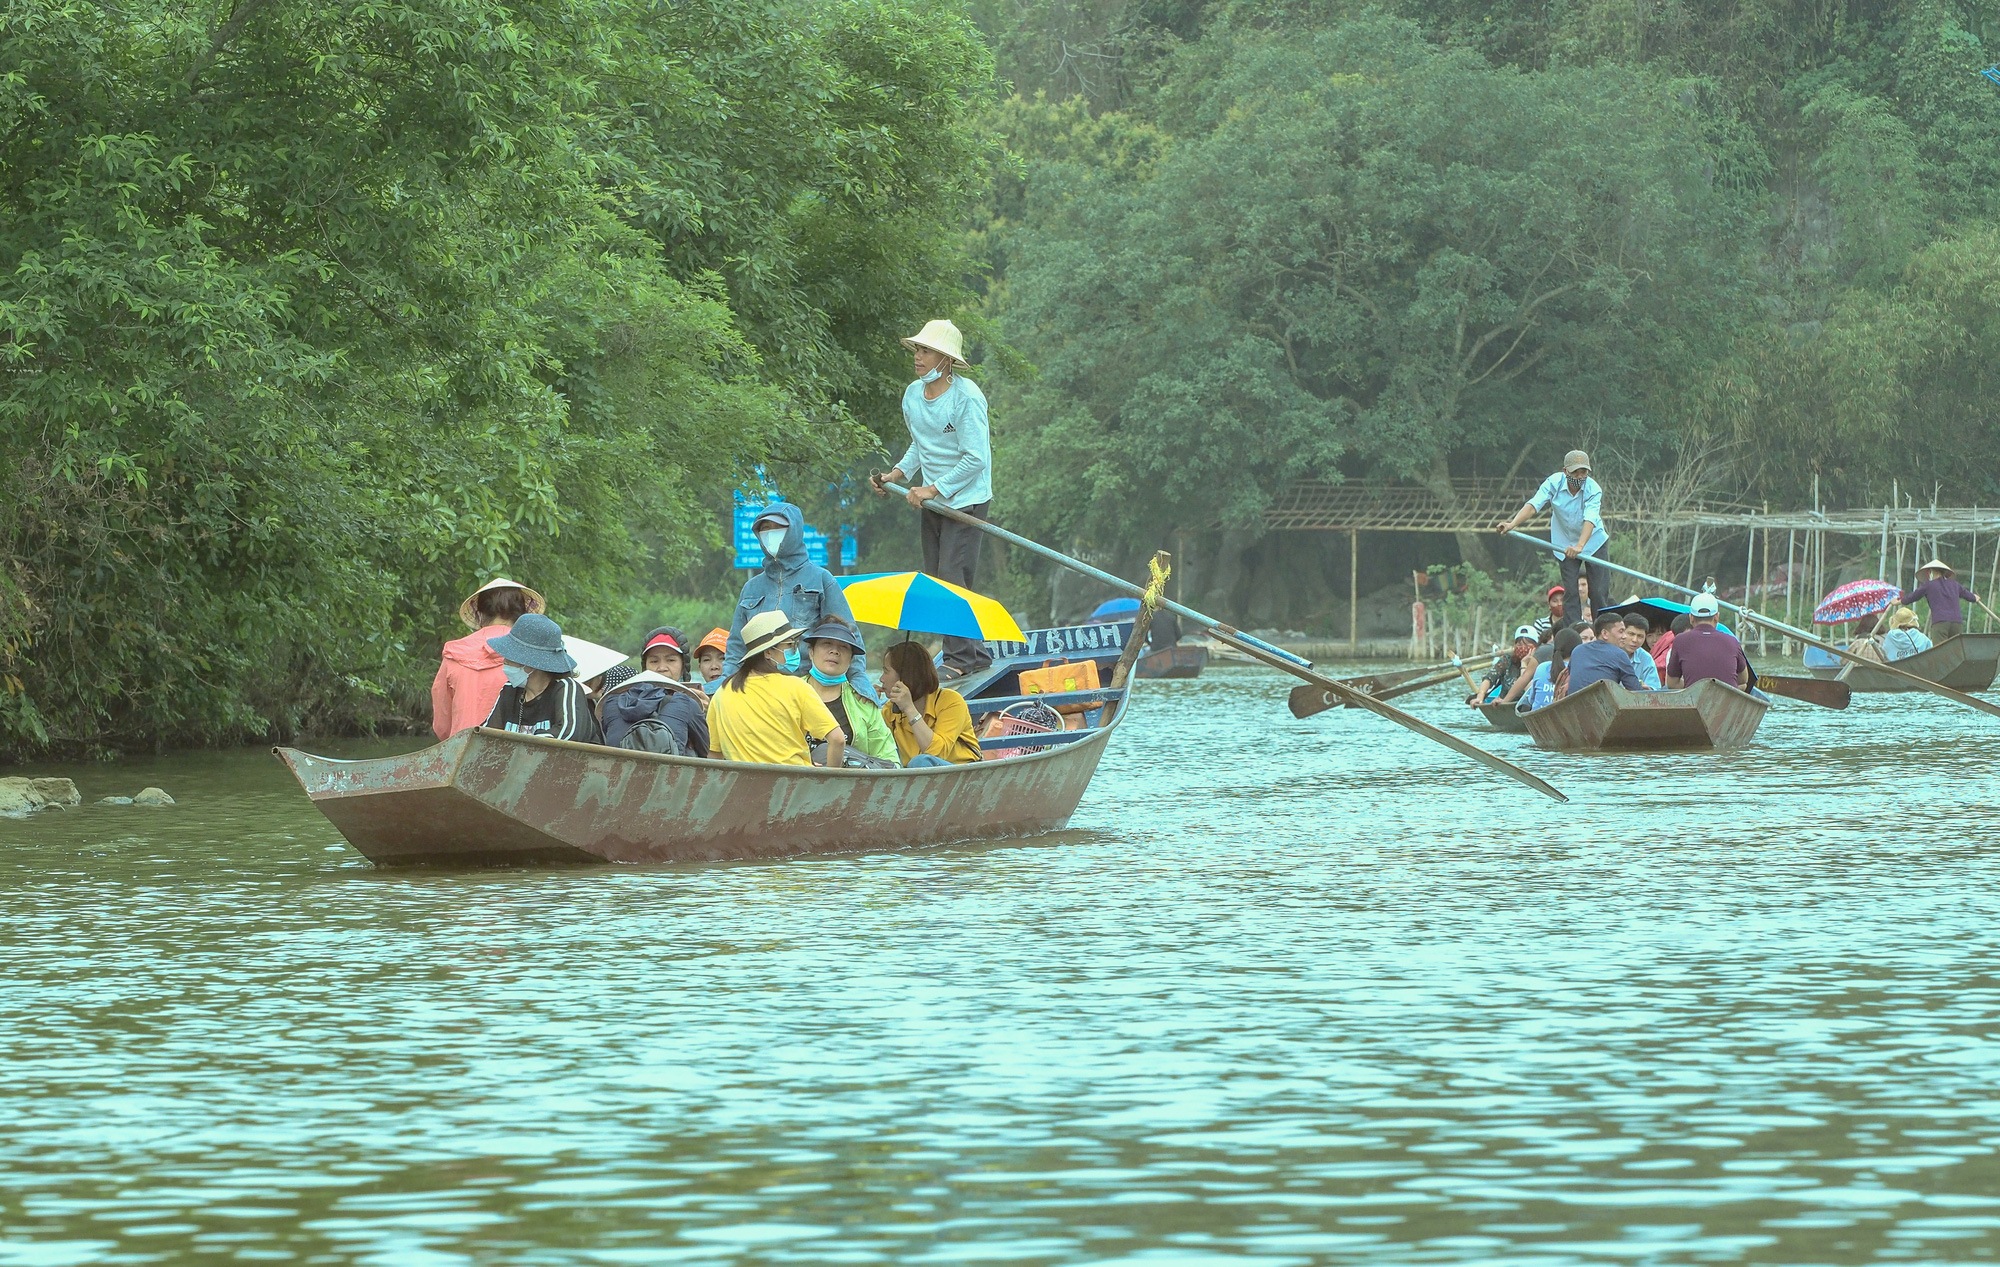 People take boats to visit the Huong Pagoda Festival in Hanoi, March 13, 2021. Photo: Vu Tuan / Tuoi Tre